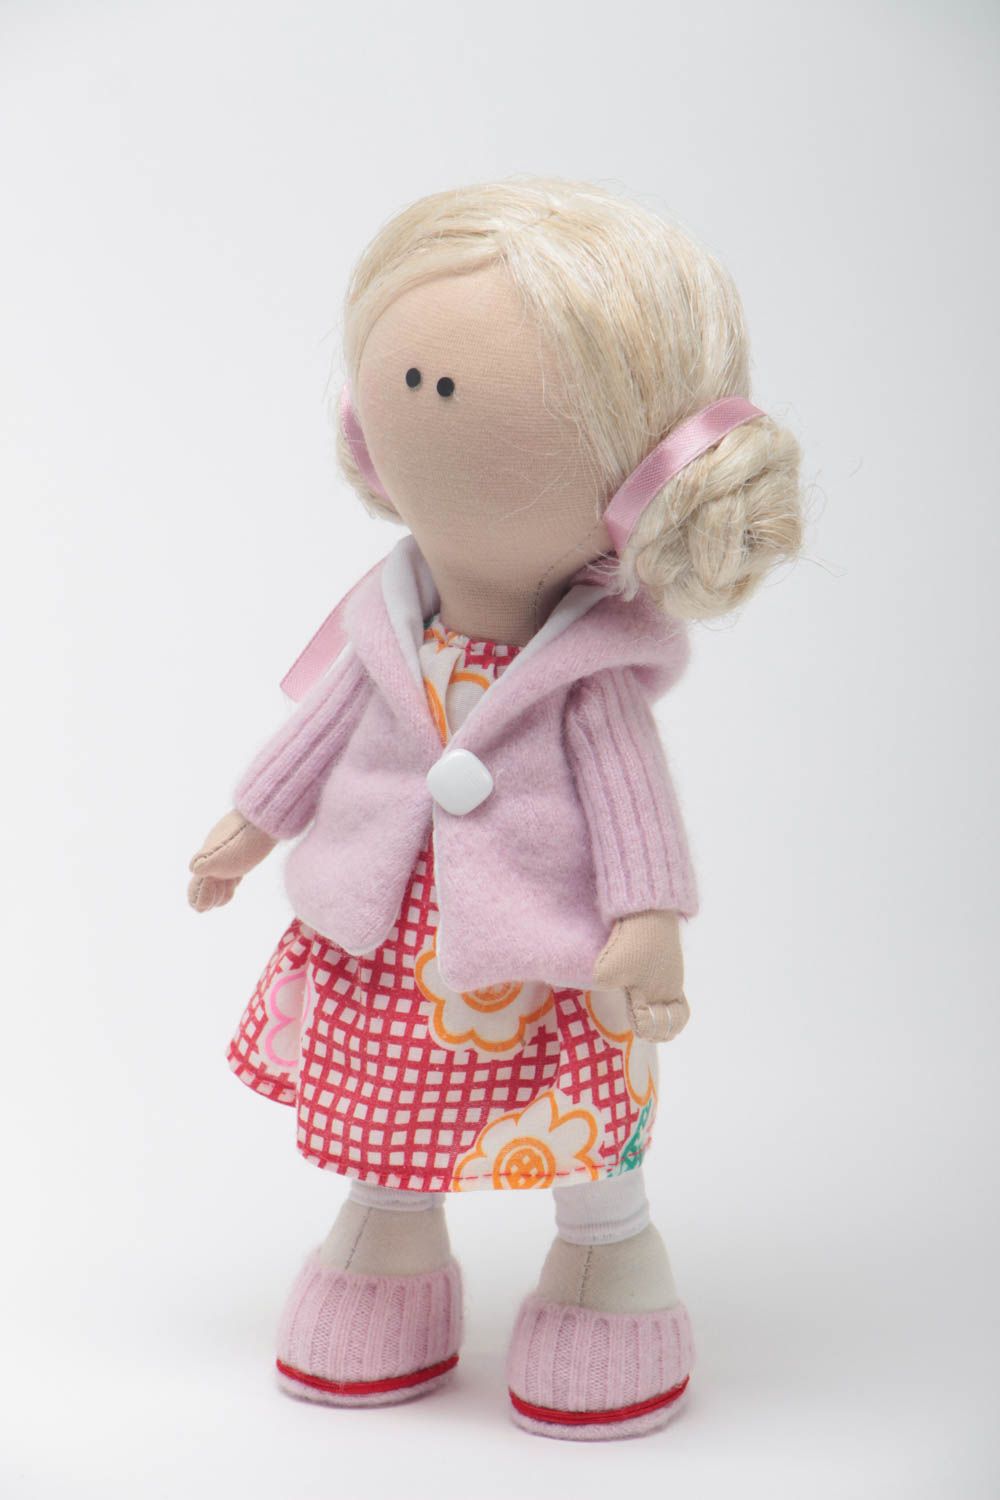 Handmade doll decorative doll nursery decor ideas unusual gift for children photo 2